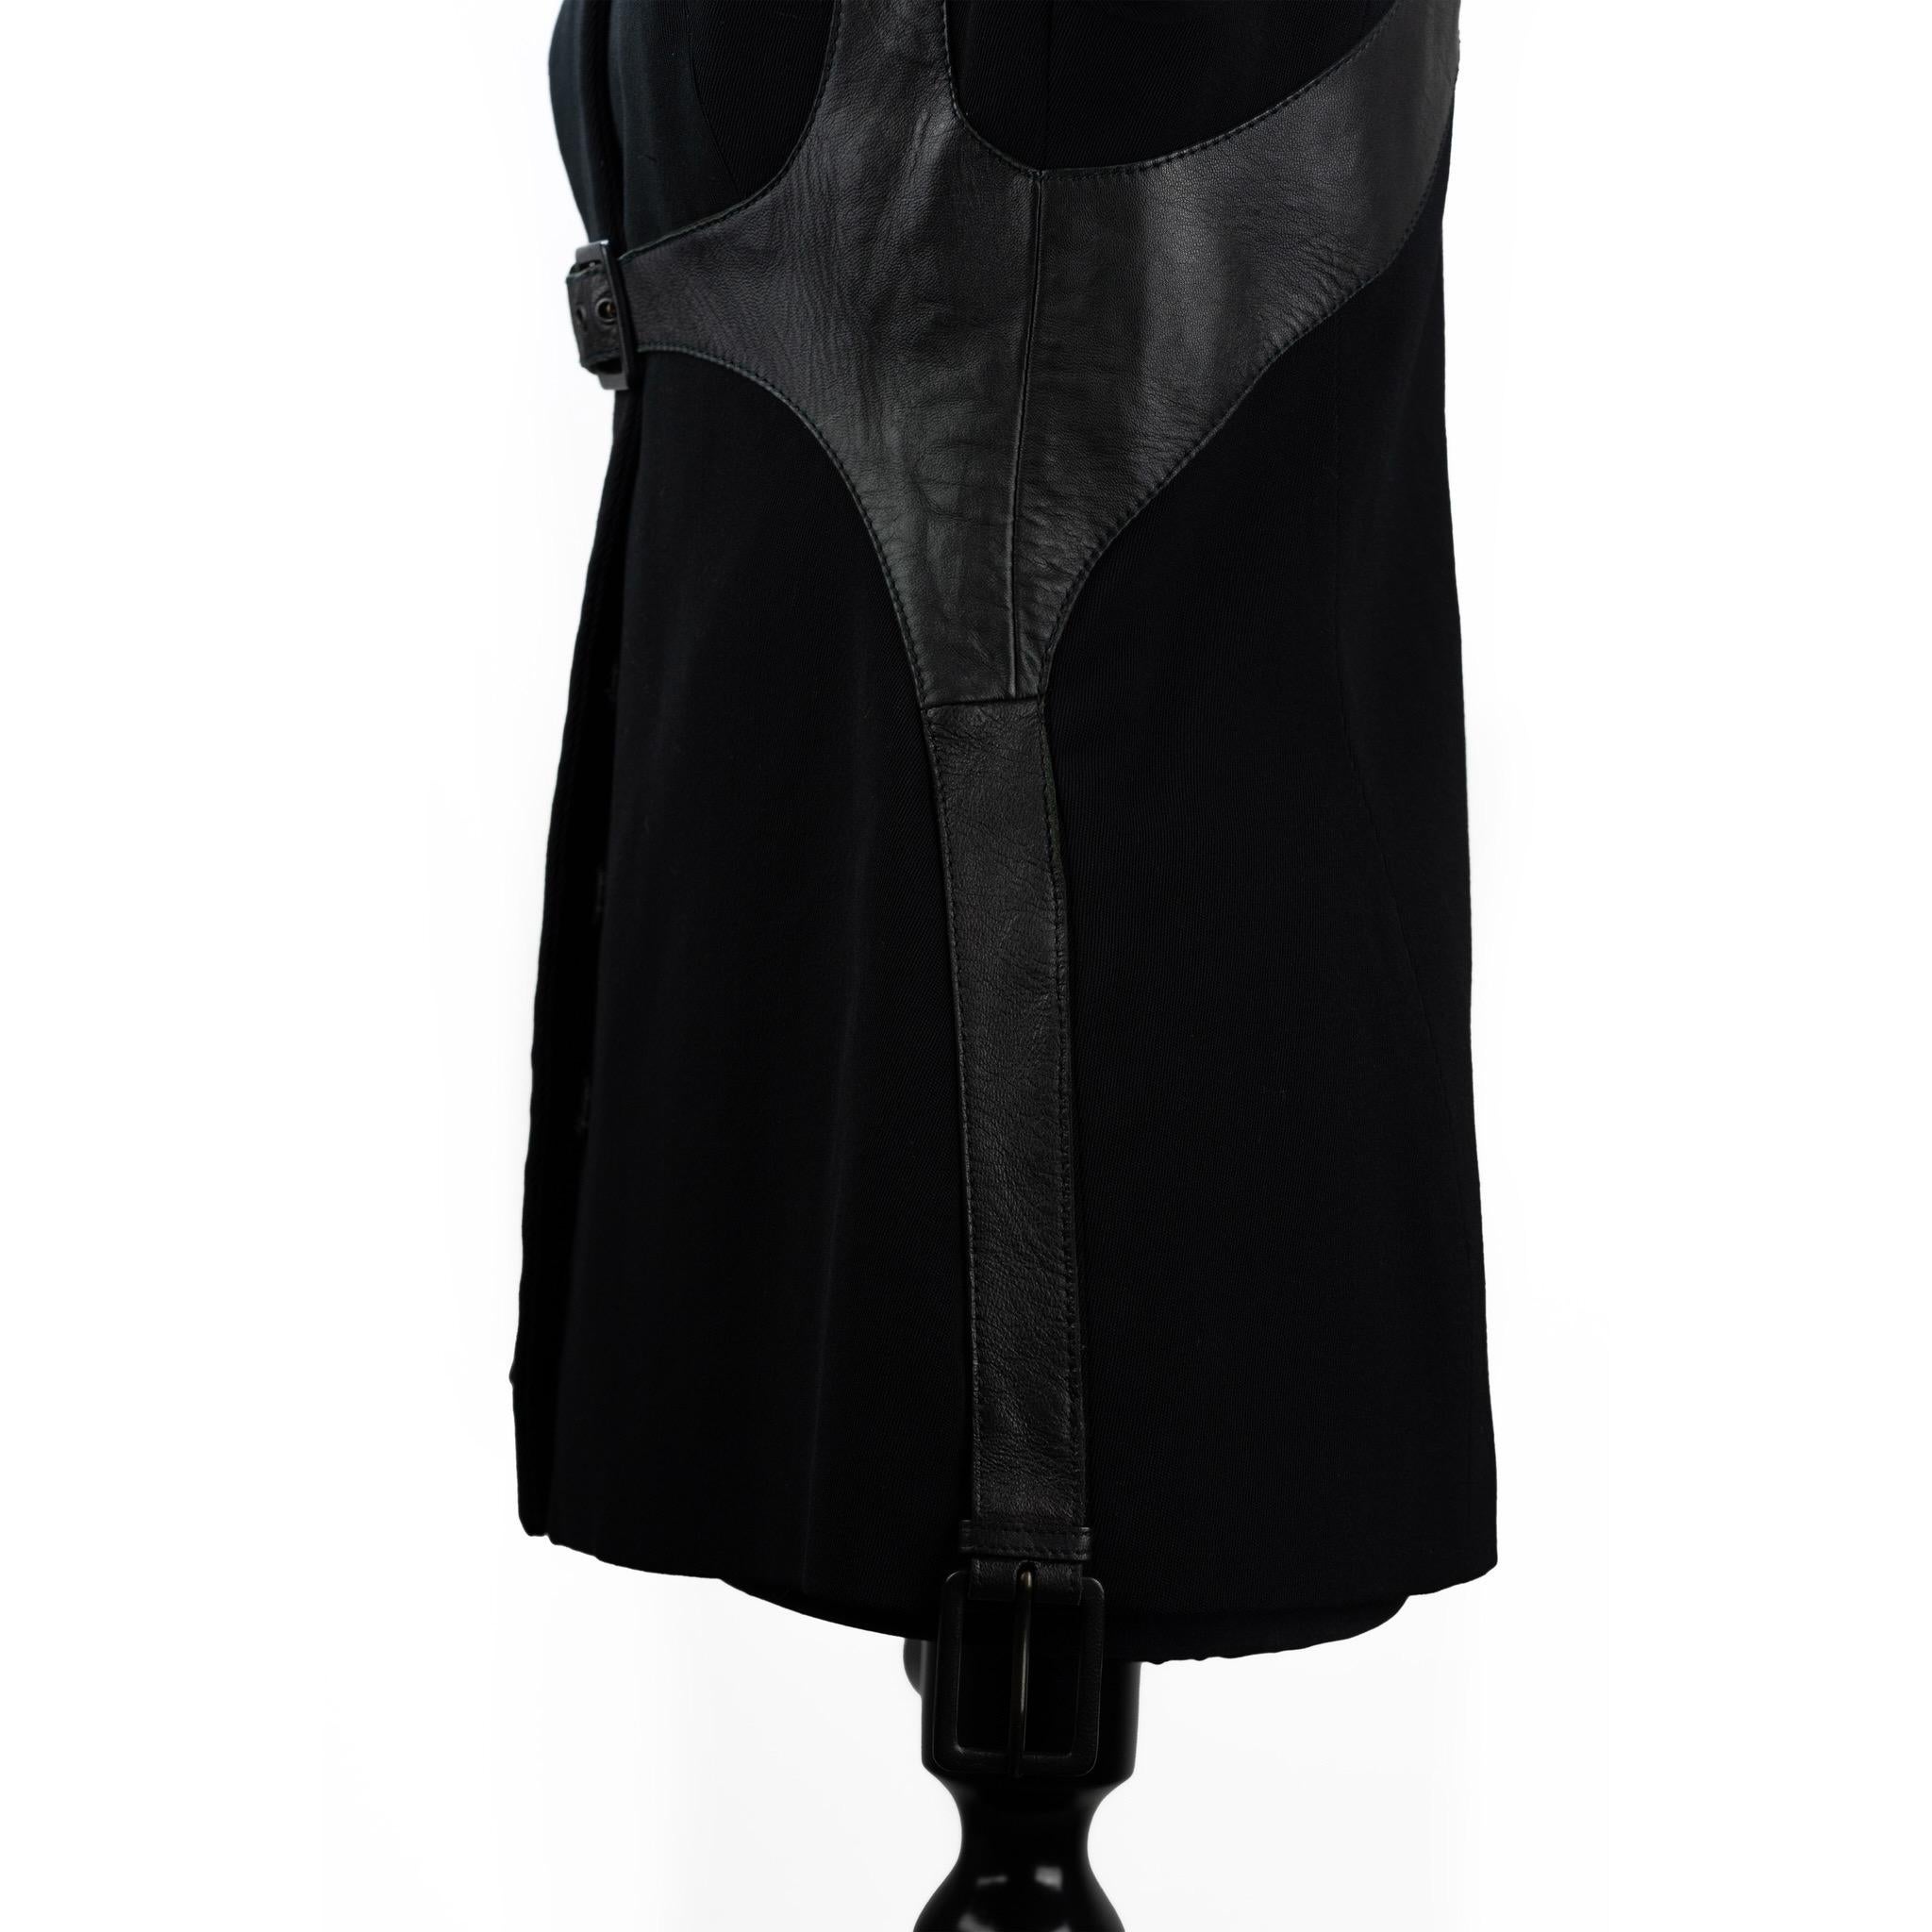 Women's or Men's Alexander McQueen 2002 Supercalifragilistic Wool Black Leather Harness Jacket.